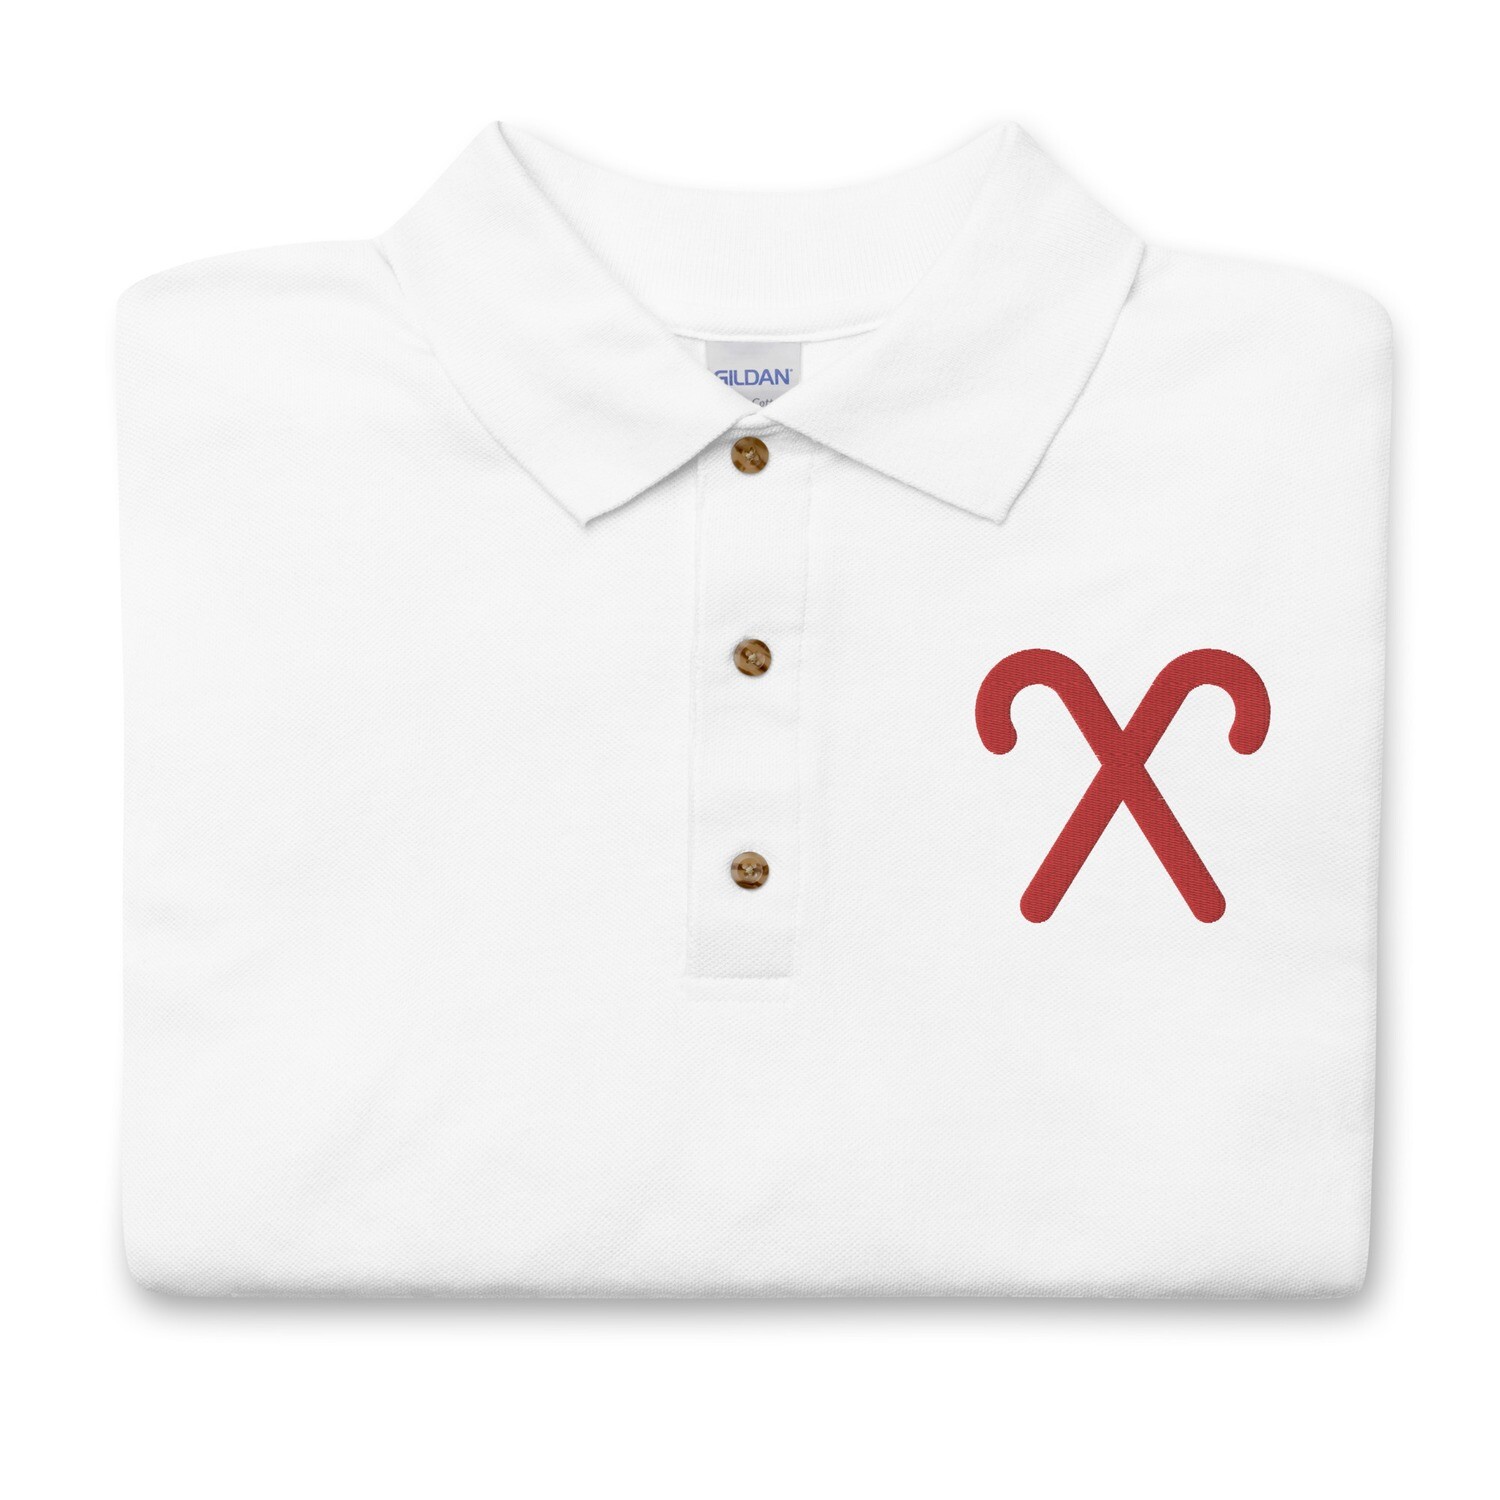 Double Kane Embroidered Polo Shirt